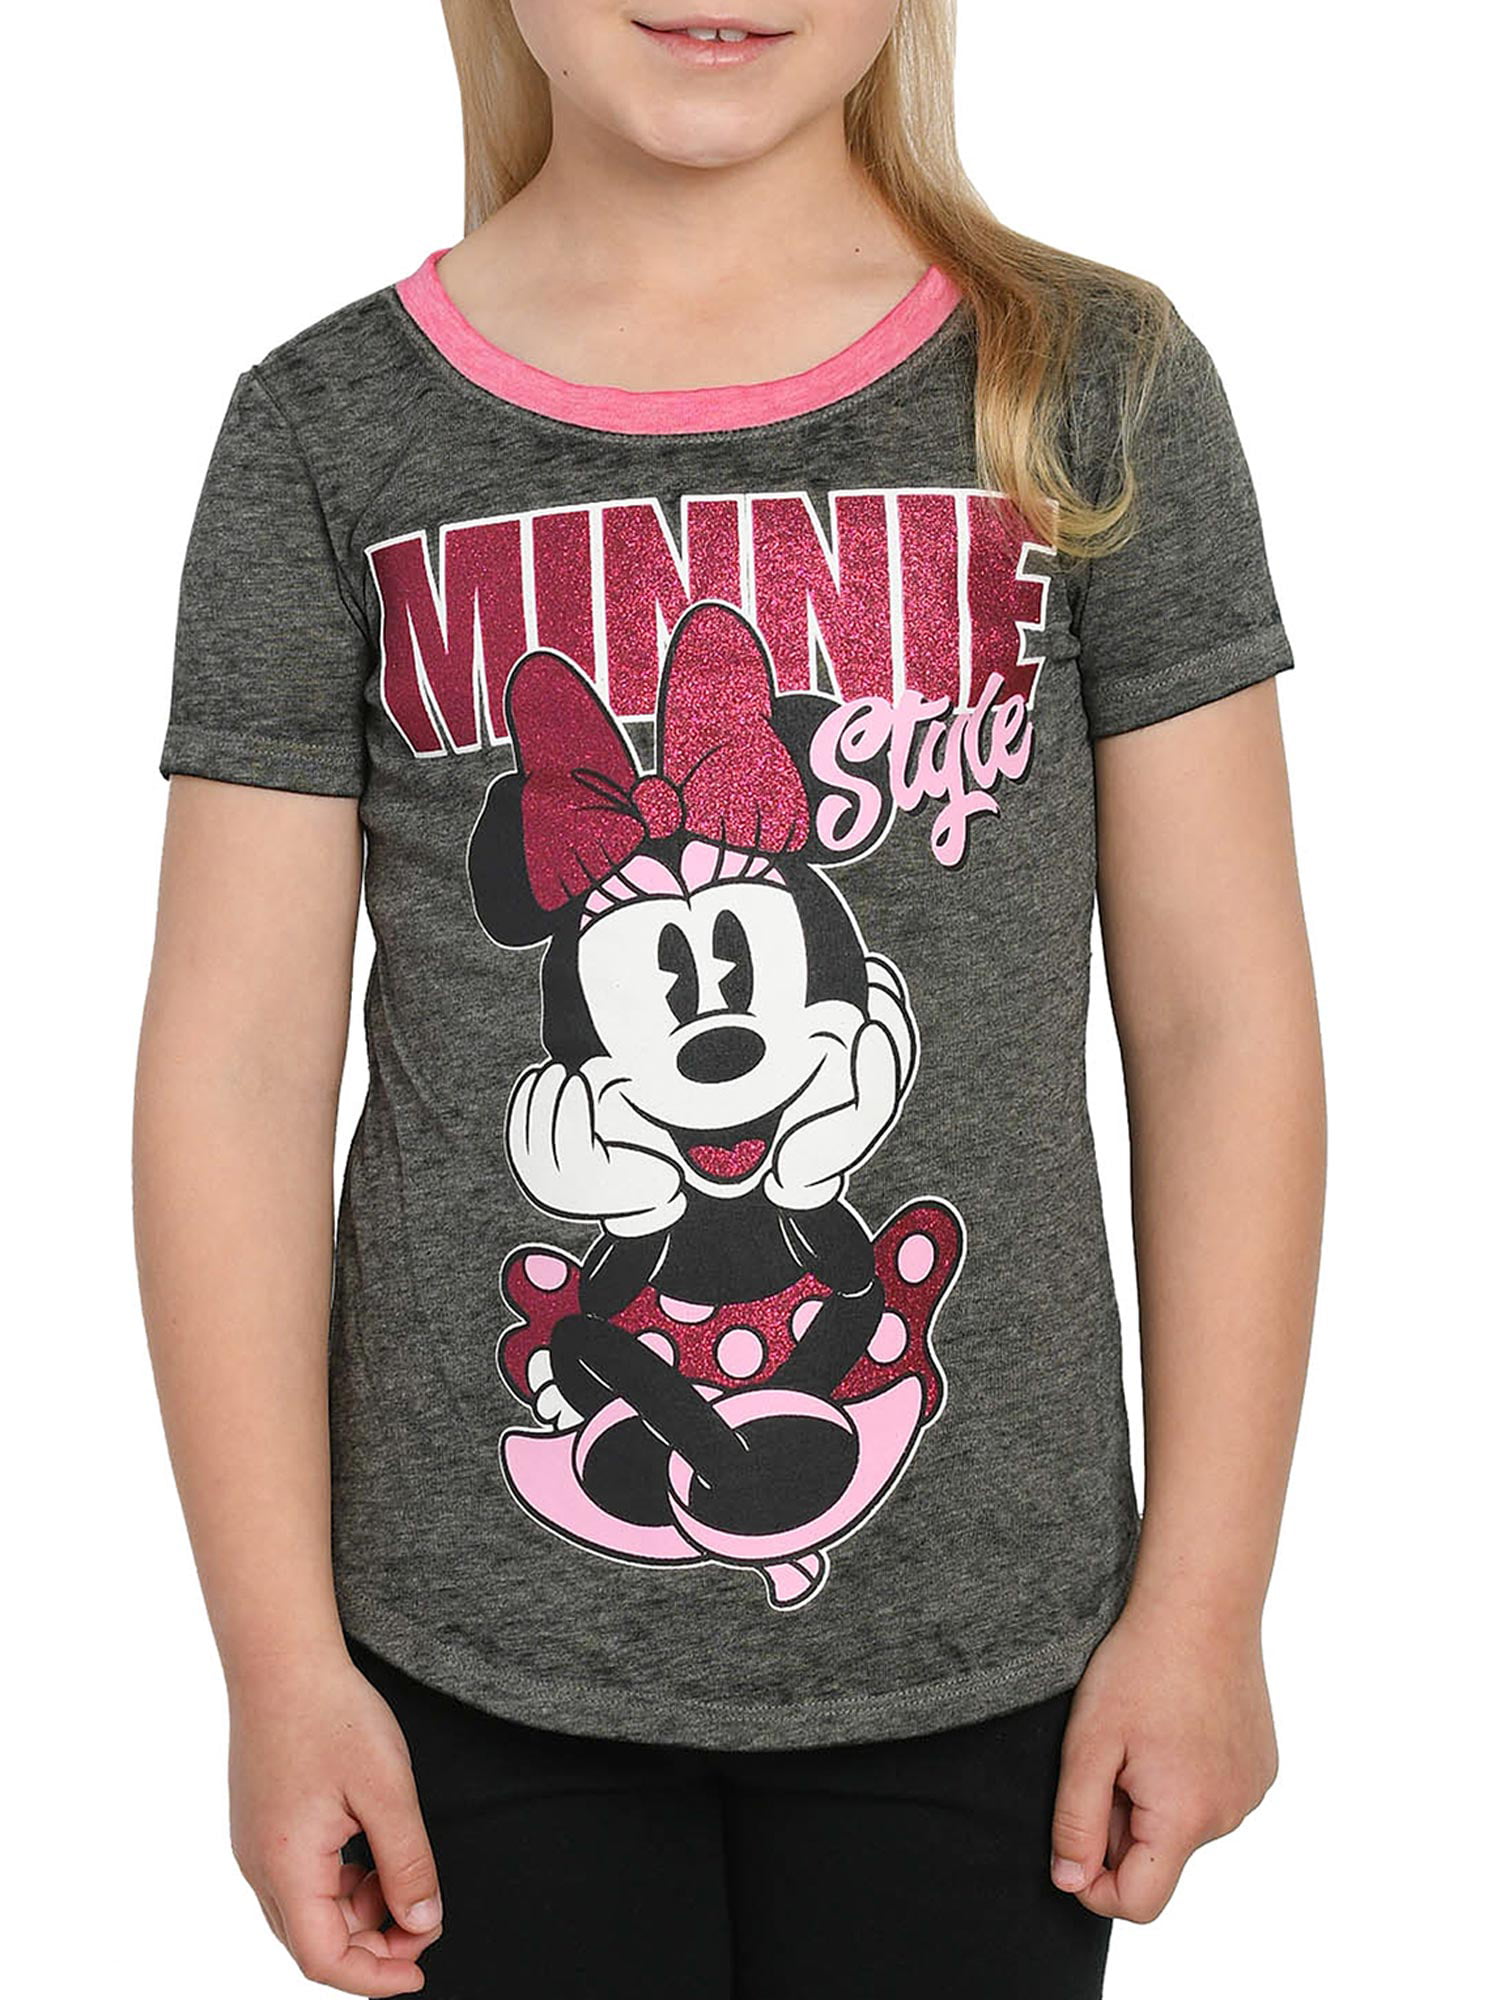 Girls Children Child Disney Minnie Mouse T-Shirt Top age 2-10 years 